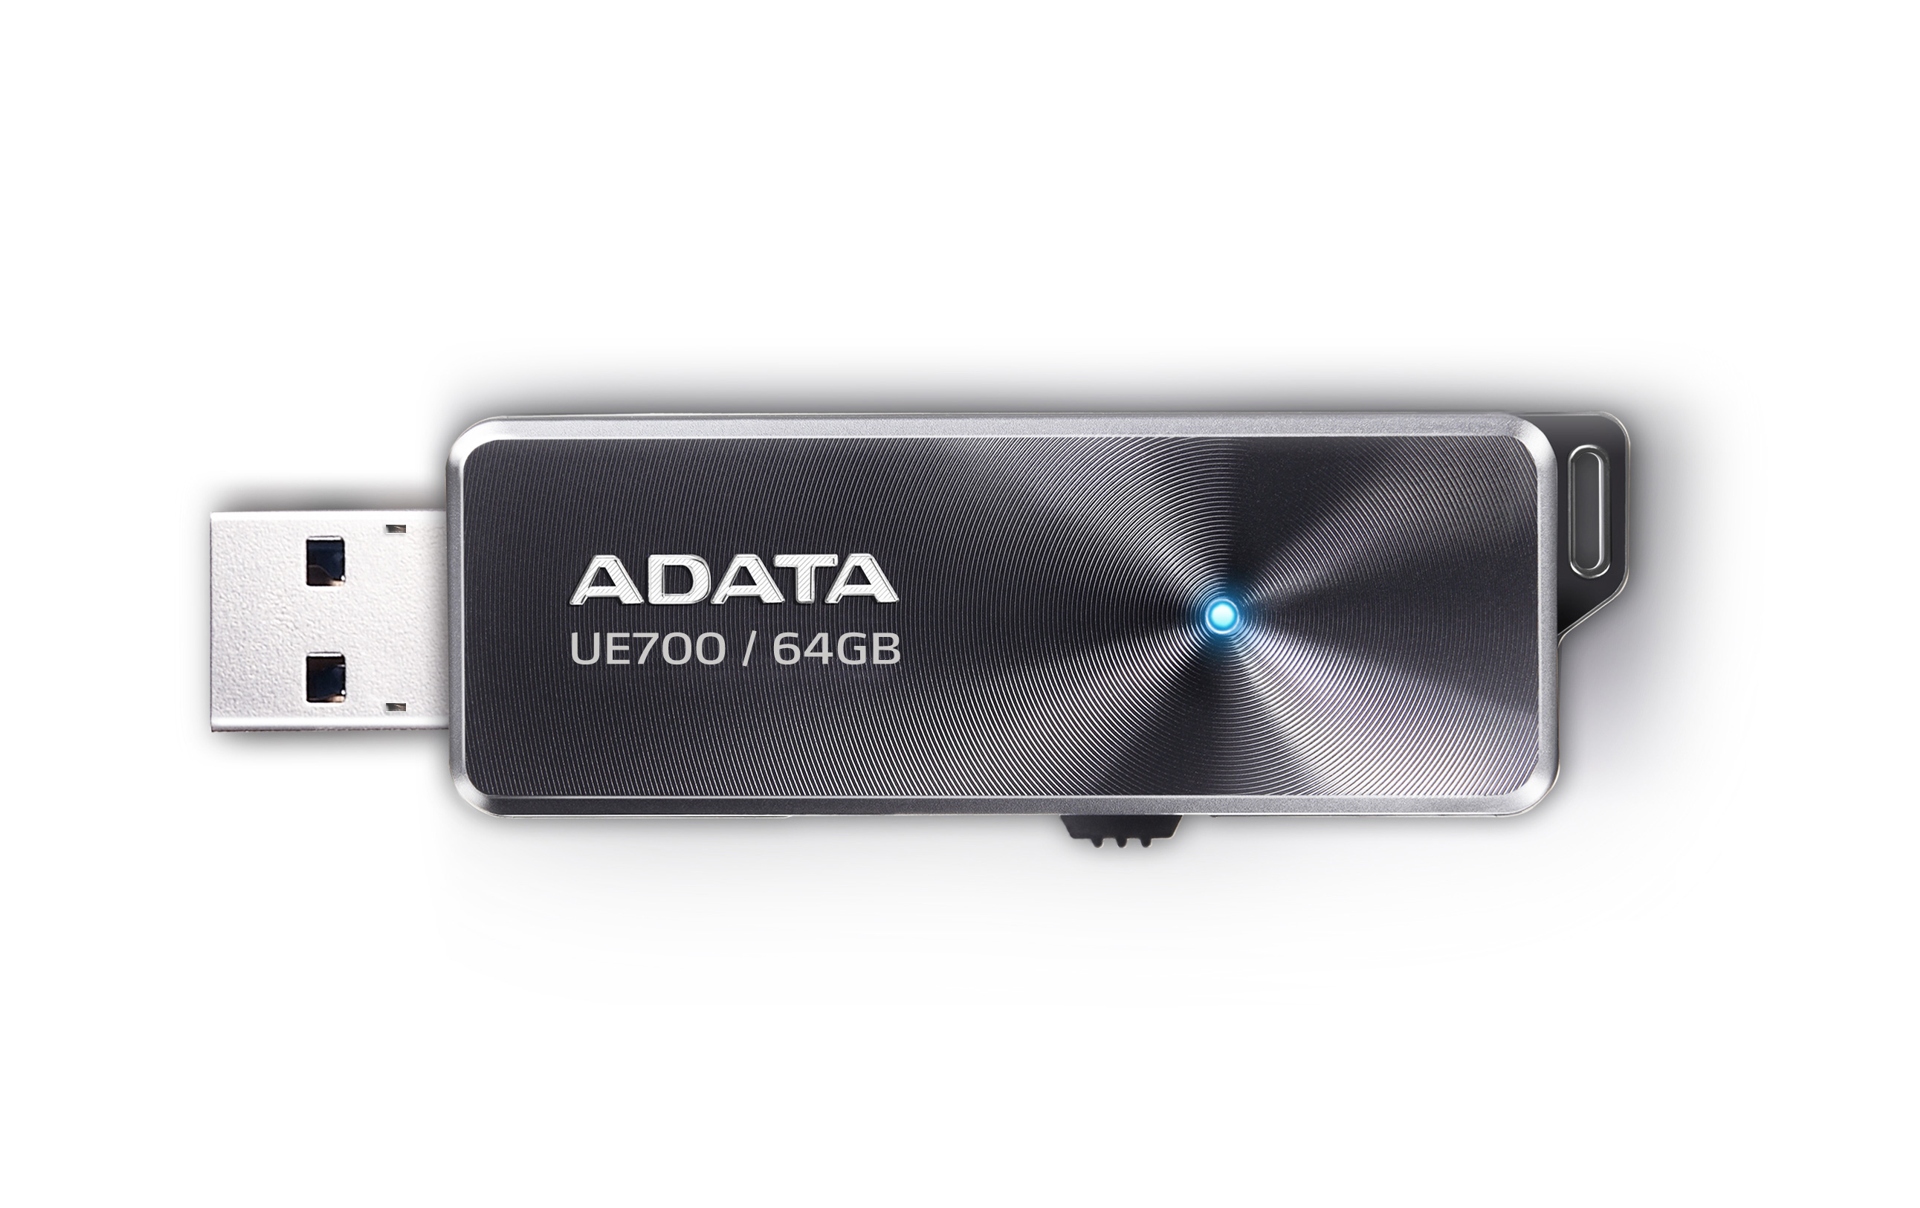 Media asset in full size related to 3dfxzone.it news item entitled as follows: ADATA annuncia il flash drive USB 3.0 DashDrive Elite UE700 | Image Name: news19141_ADATA-UE700_1.jpg